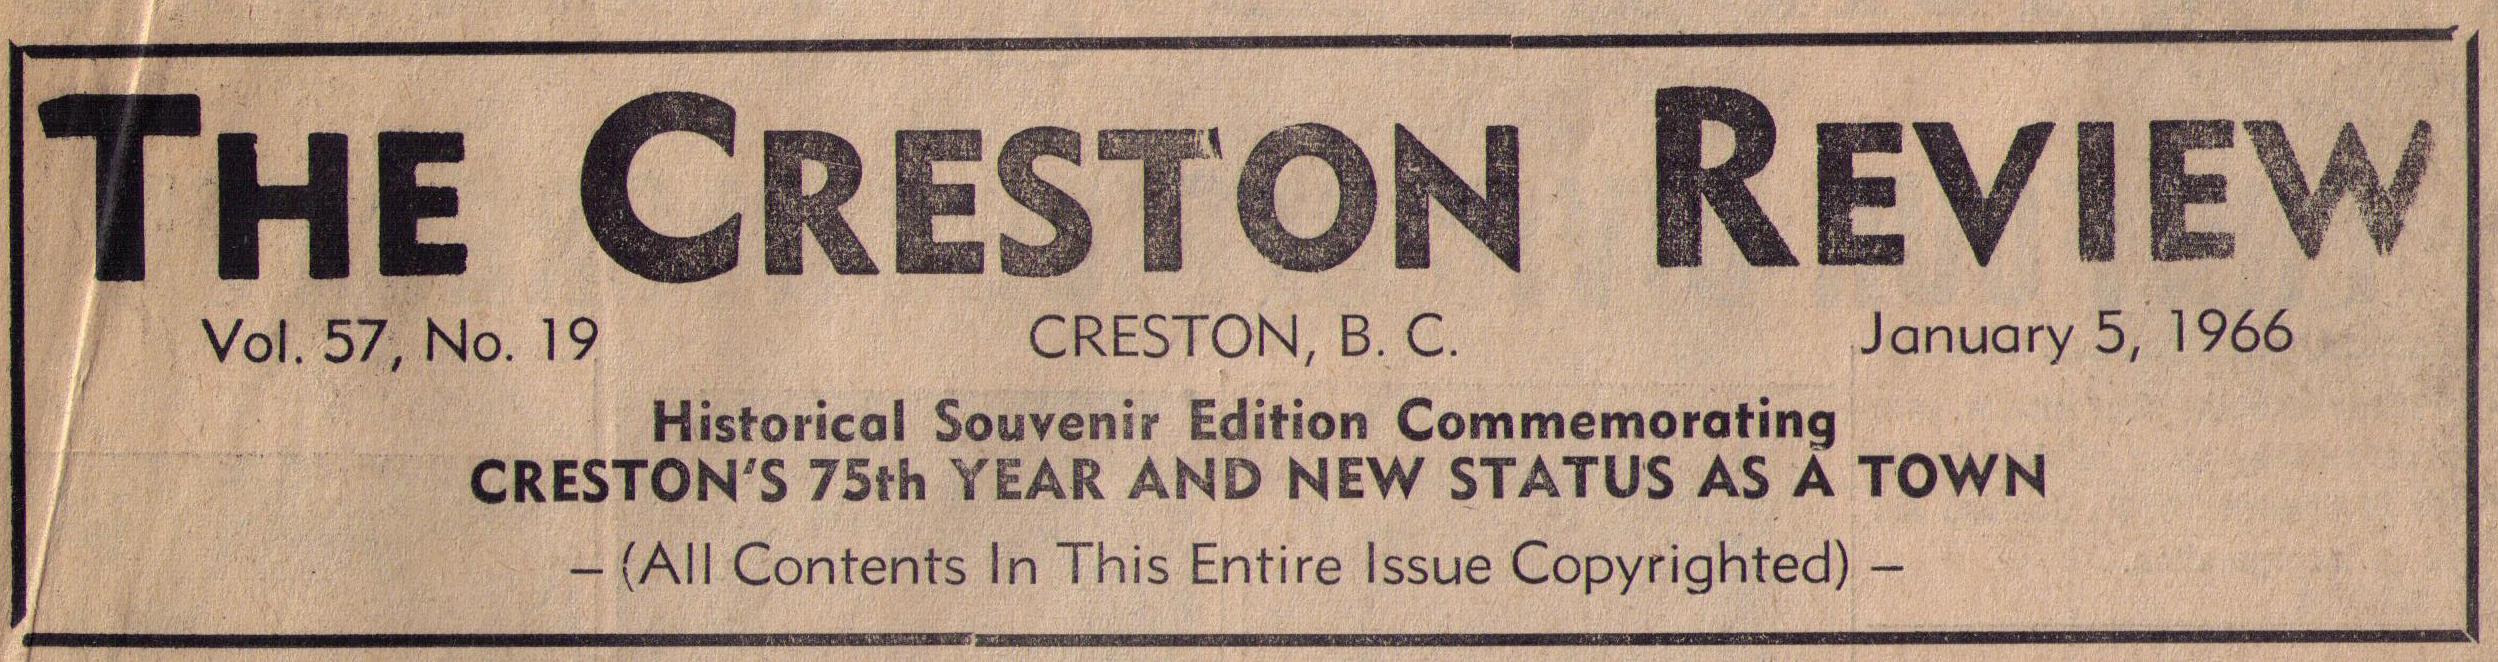 Town of Creston, Creston BC